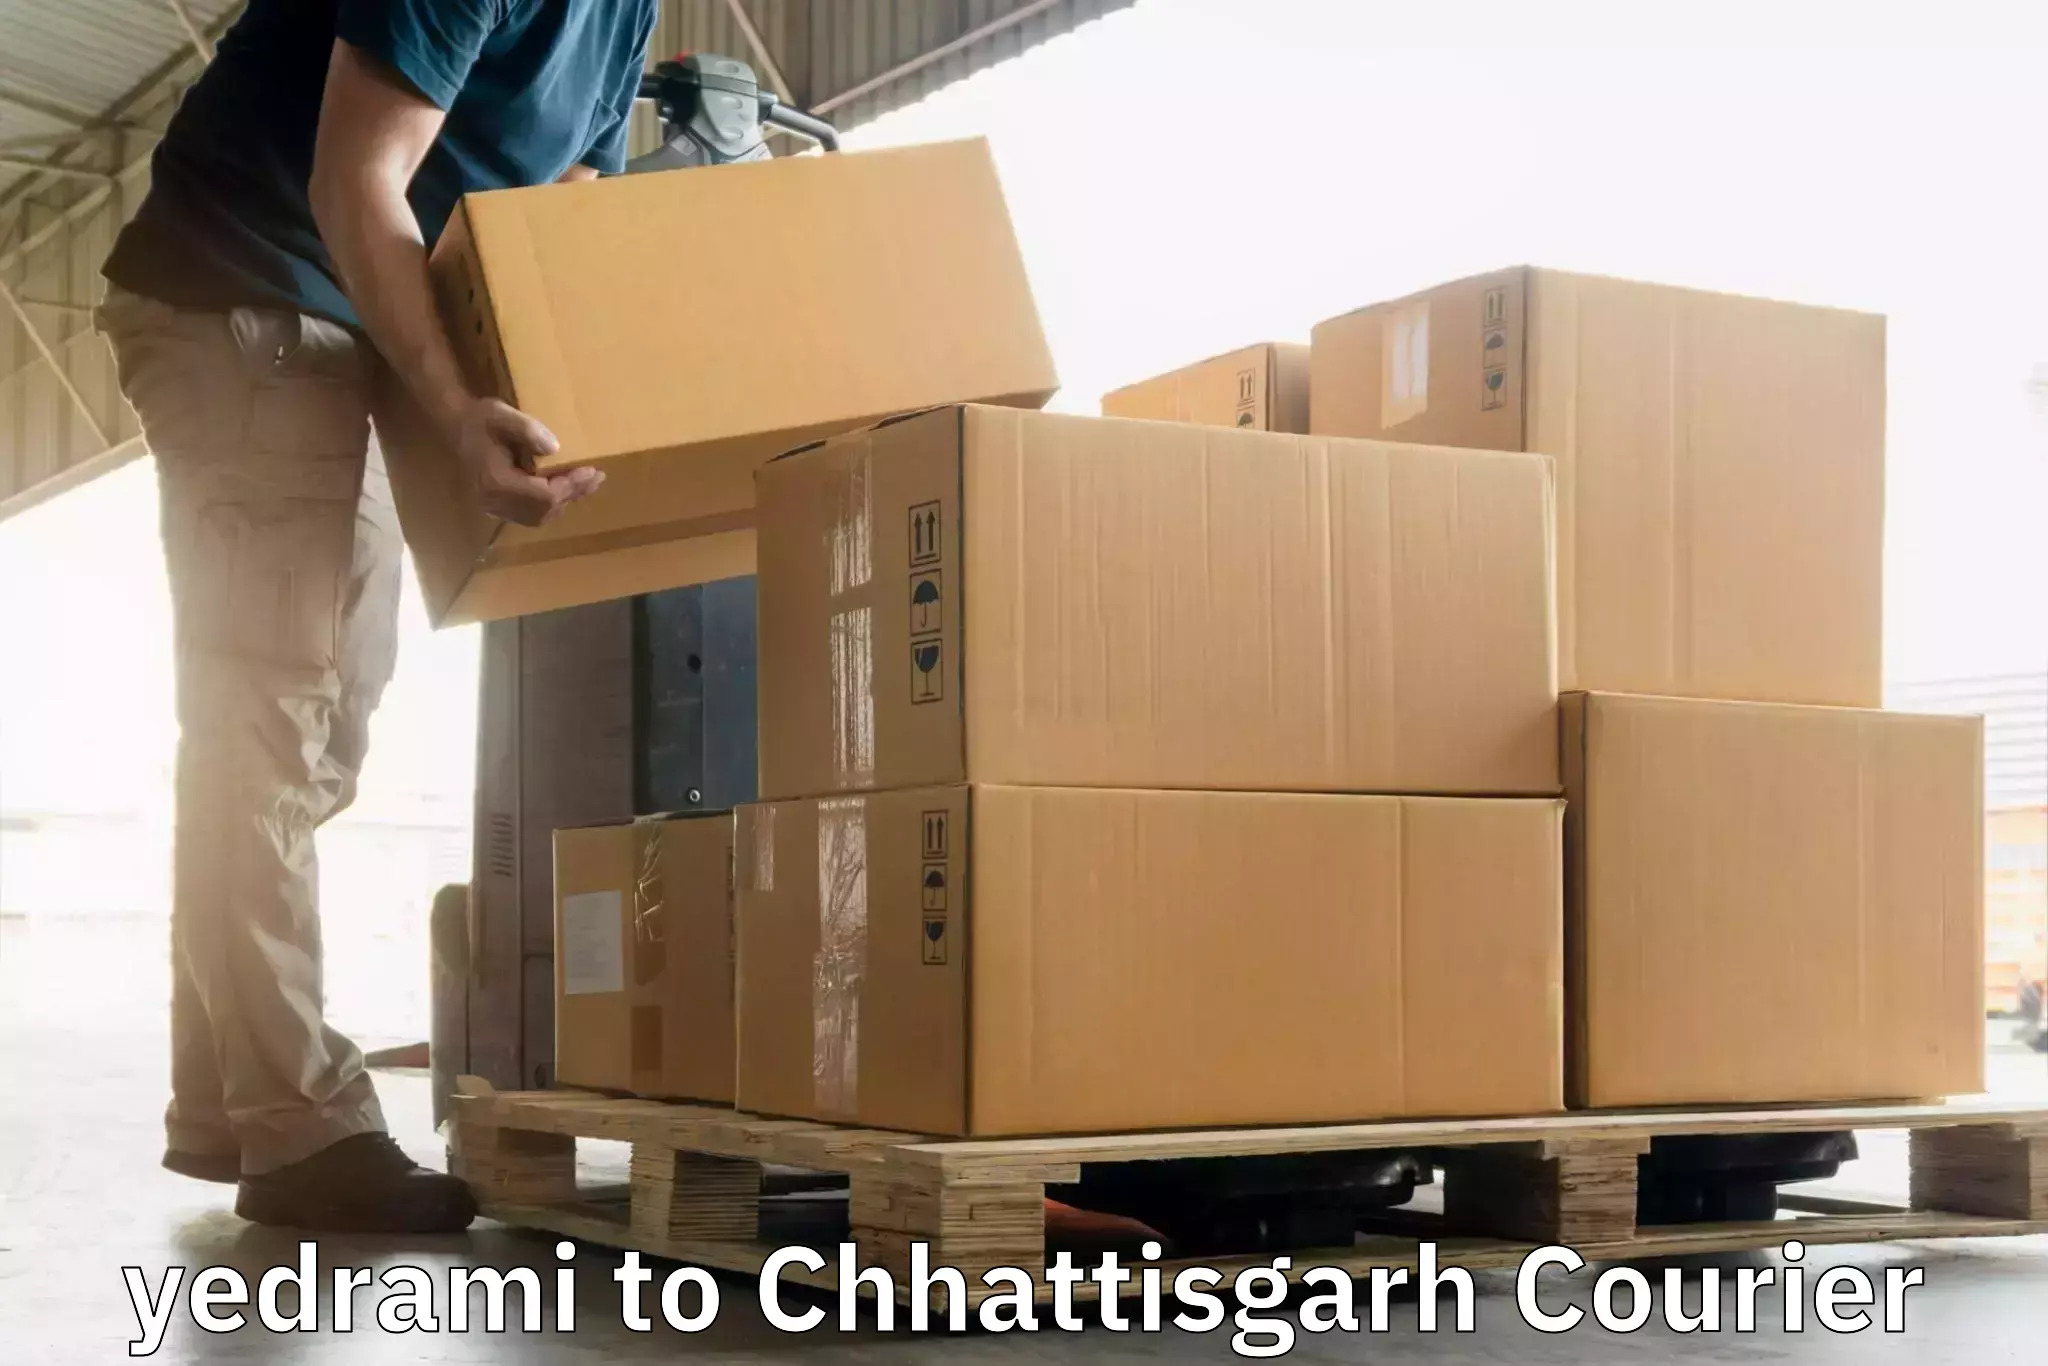 24-hour courier service yedrami to Chhattisgarh